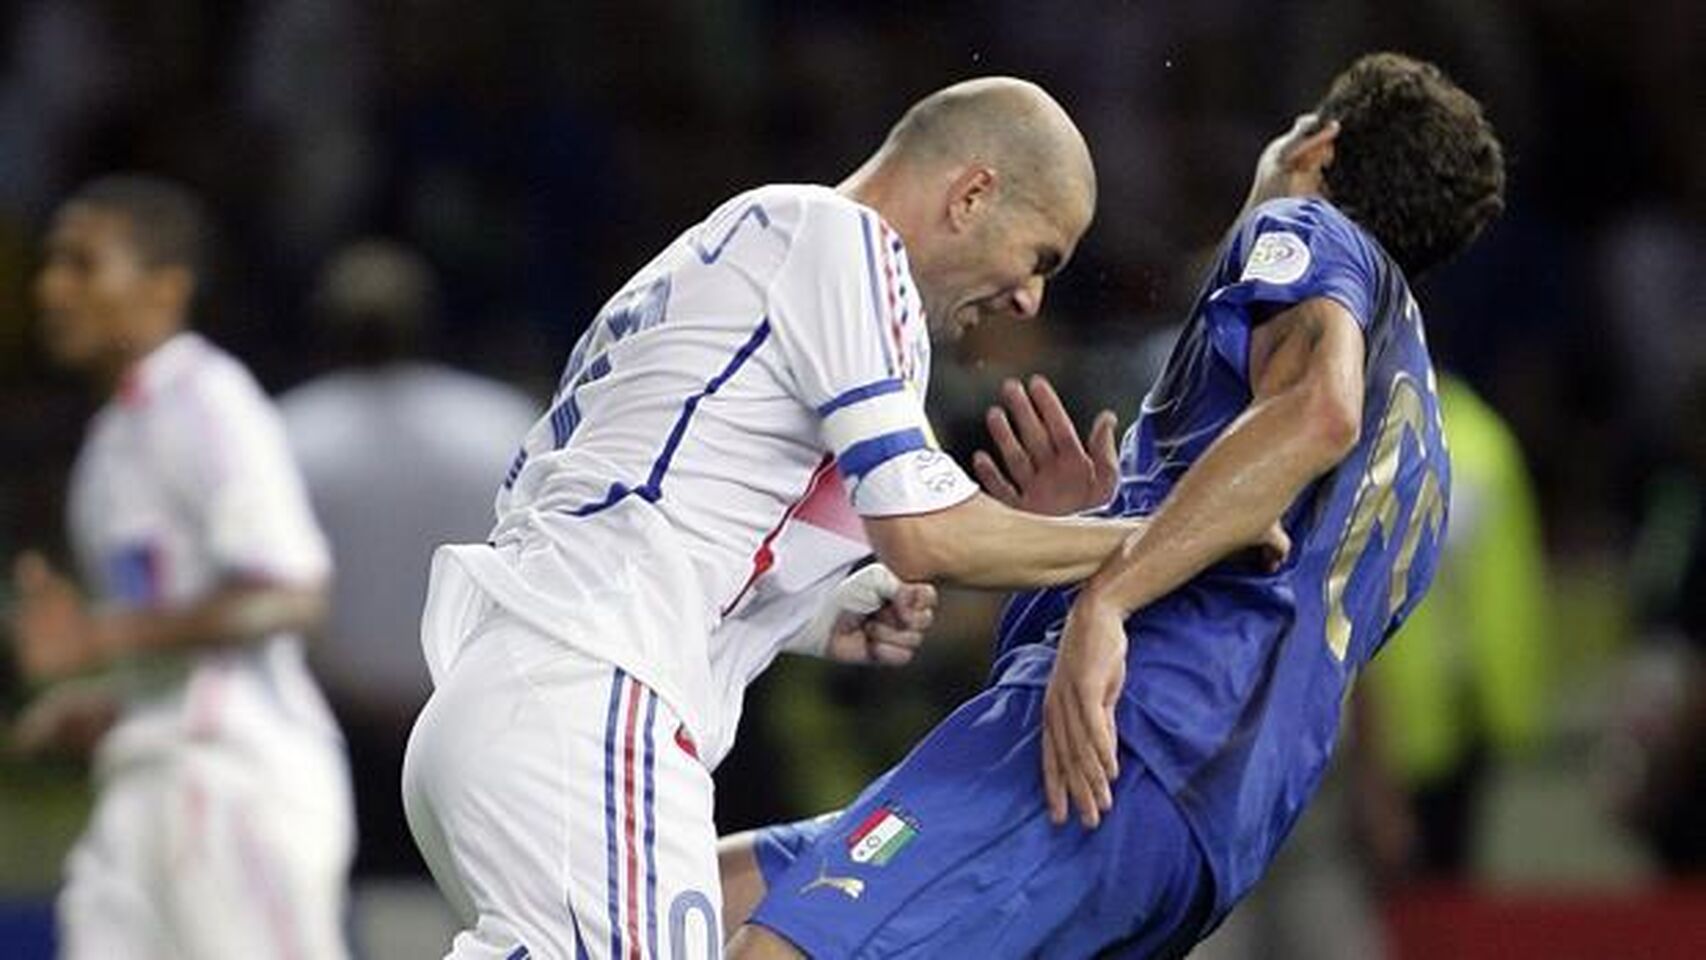 "Prefiero a tu hermana": Así es como Materazzi hizo estallar a Zidane en Alemania 2006